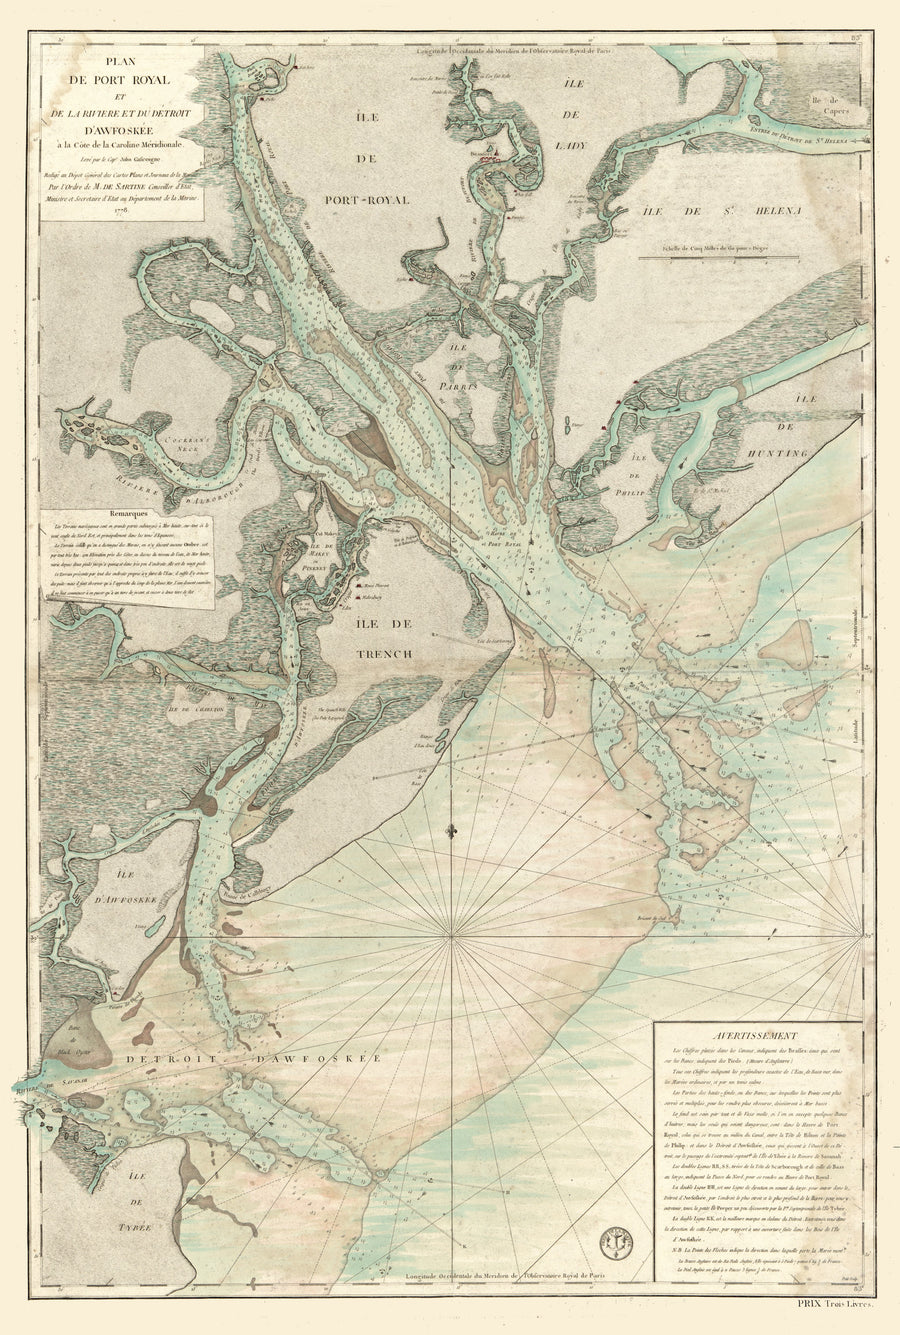 Hilton Head Map - Port Royal & Daufuskie Island - 1778